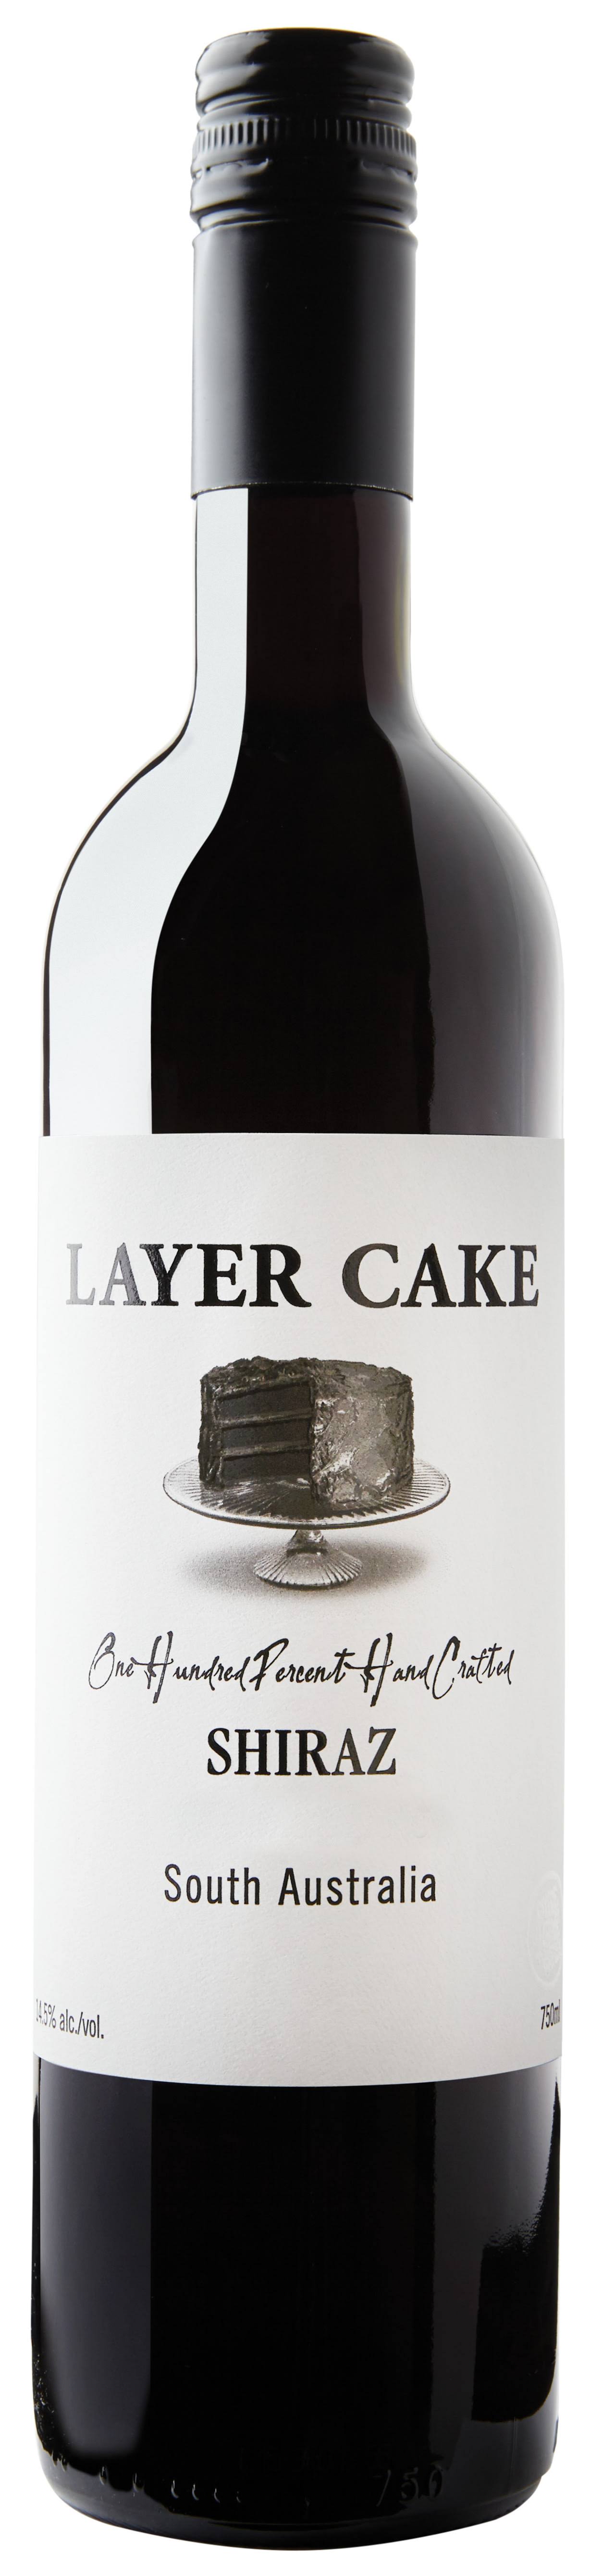 Layer Cake Shiraz - South Australia